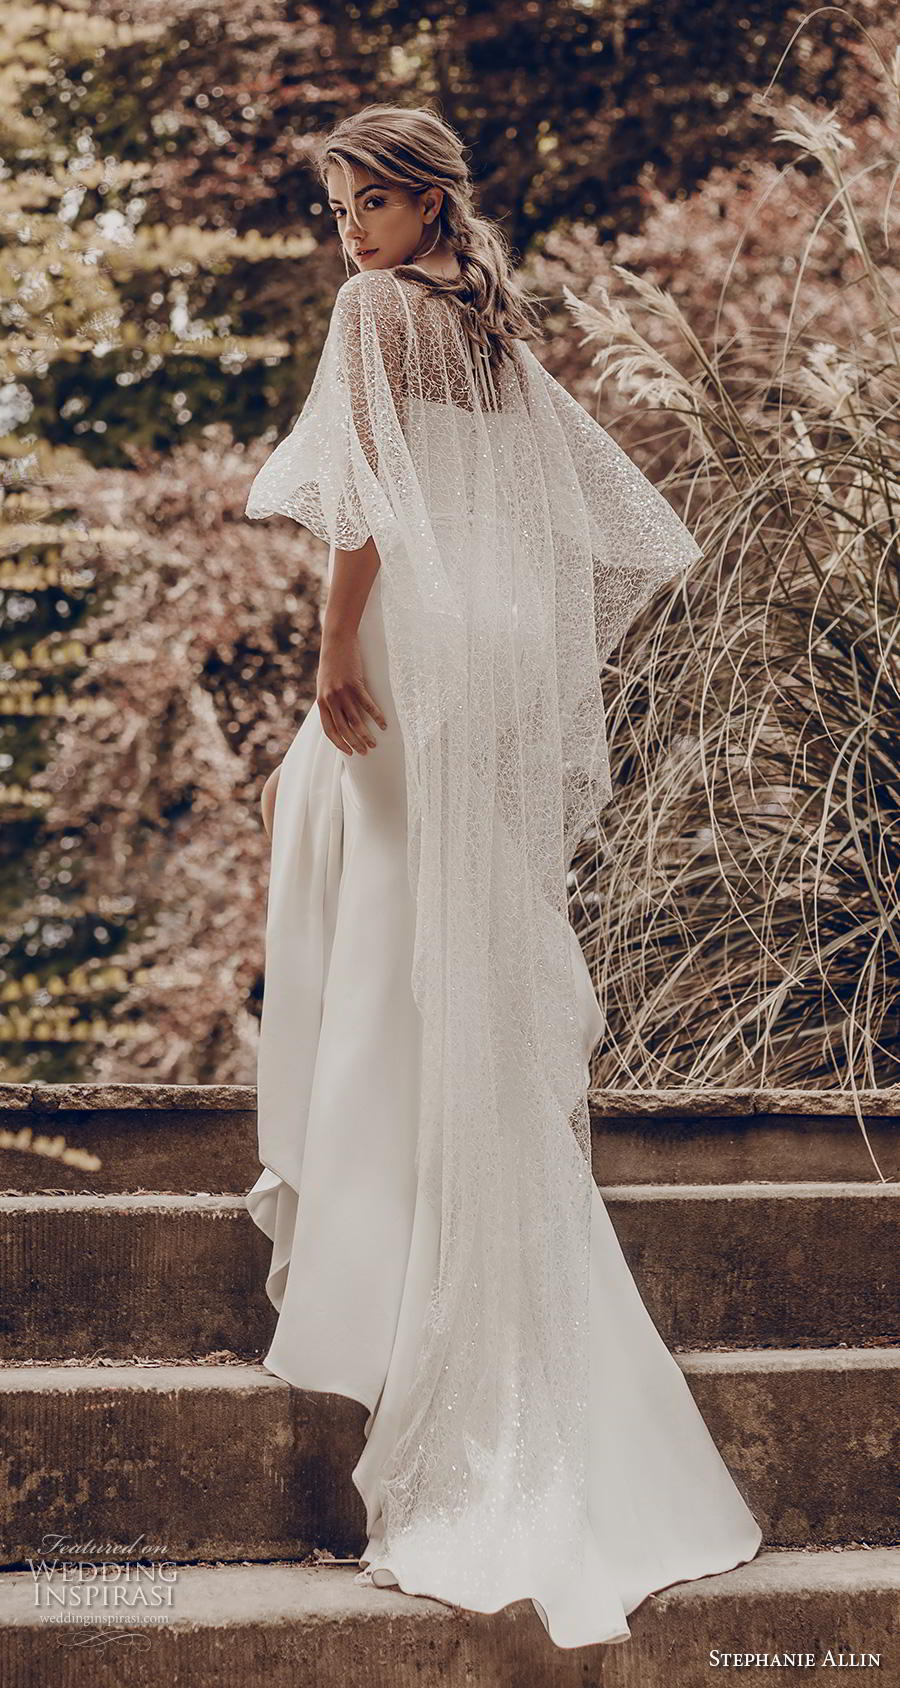 stephanie allin 2019 bridal sleeveless spaghetti strap sweetheart neckline simple minimalist elegant fit and flare wedding dress with cape chapel train (9) bv